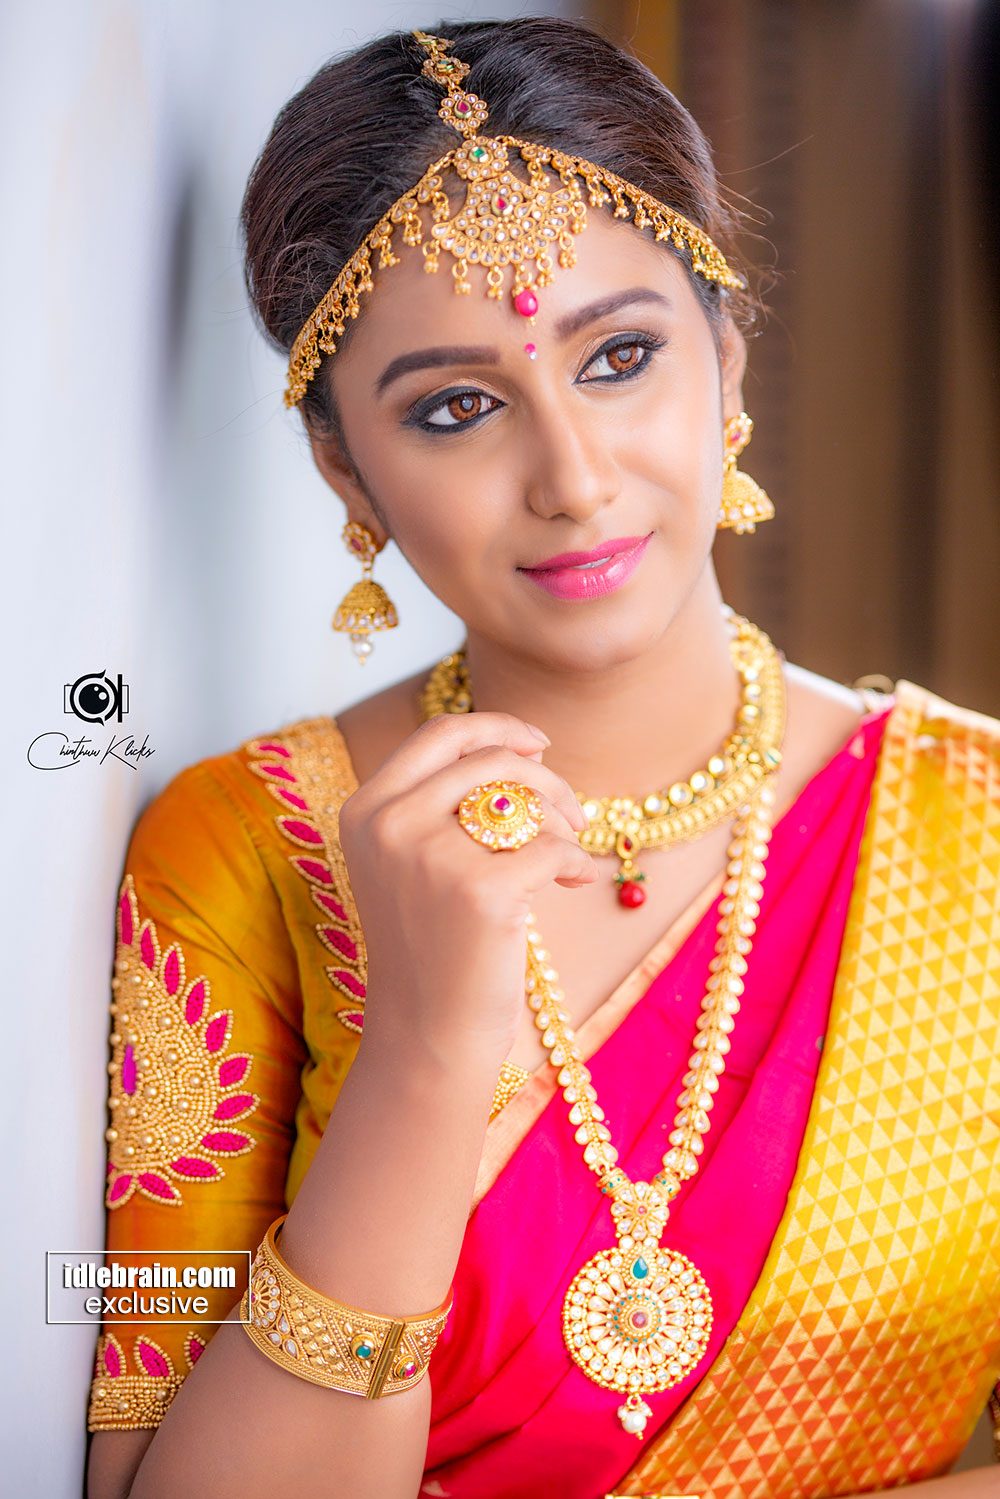 Dakkshi Guttikonda photo gallery - Telugu cinema actress